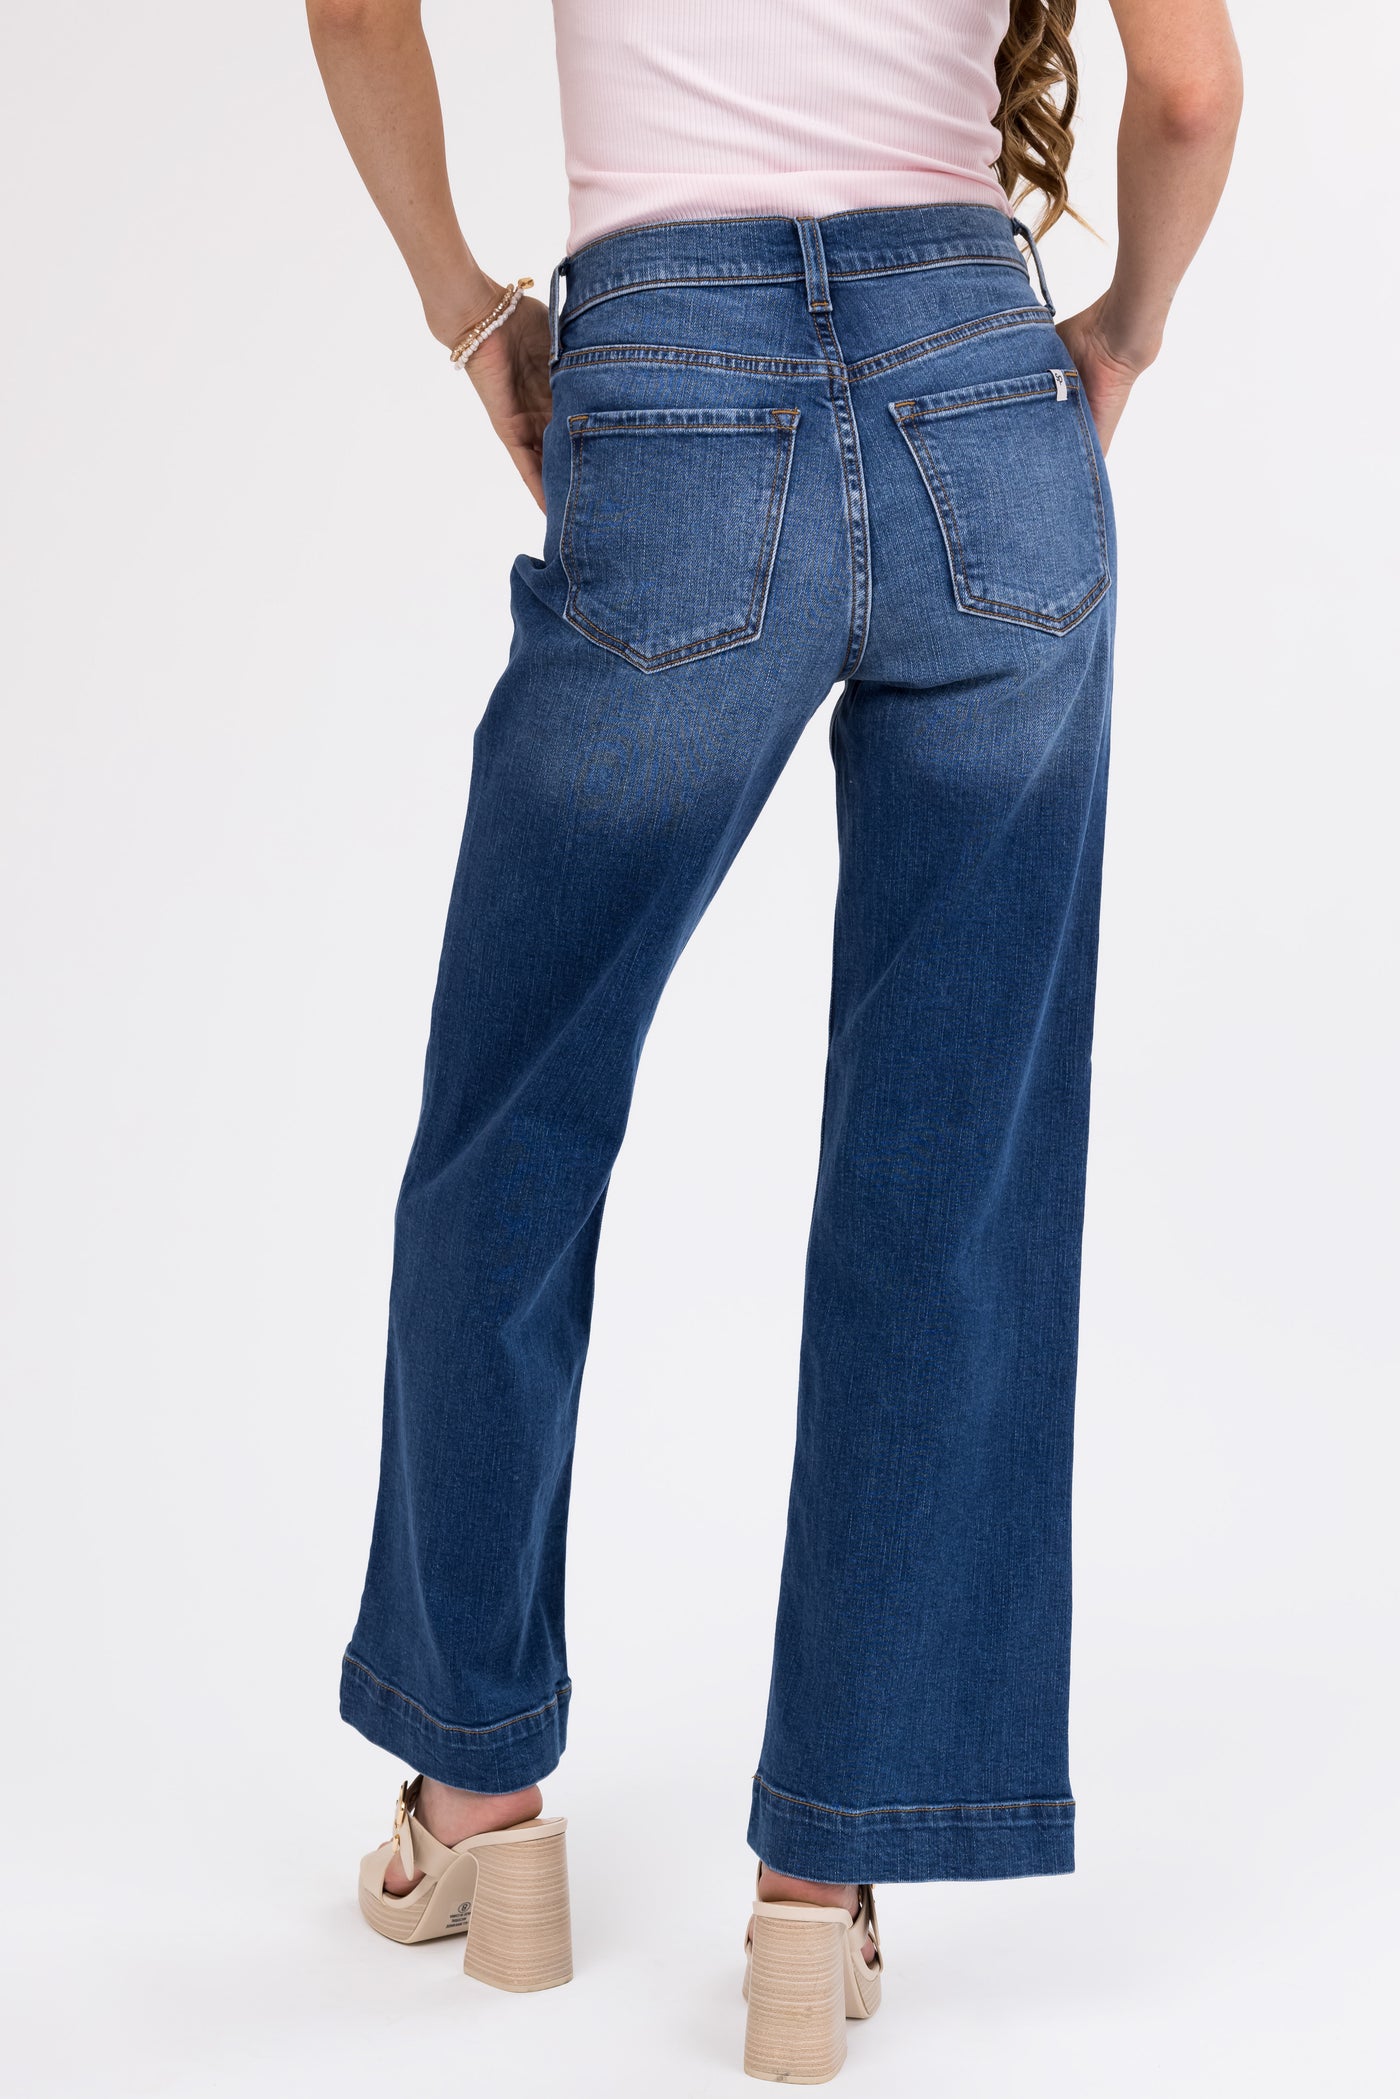 Sneak Peek Medium Wash High Rise Wide Jeans